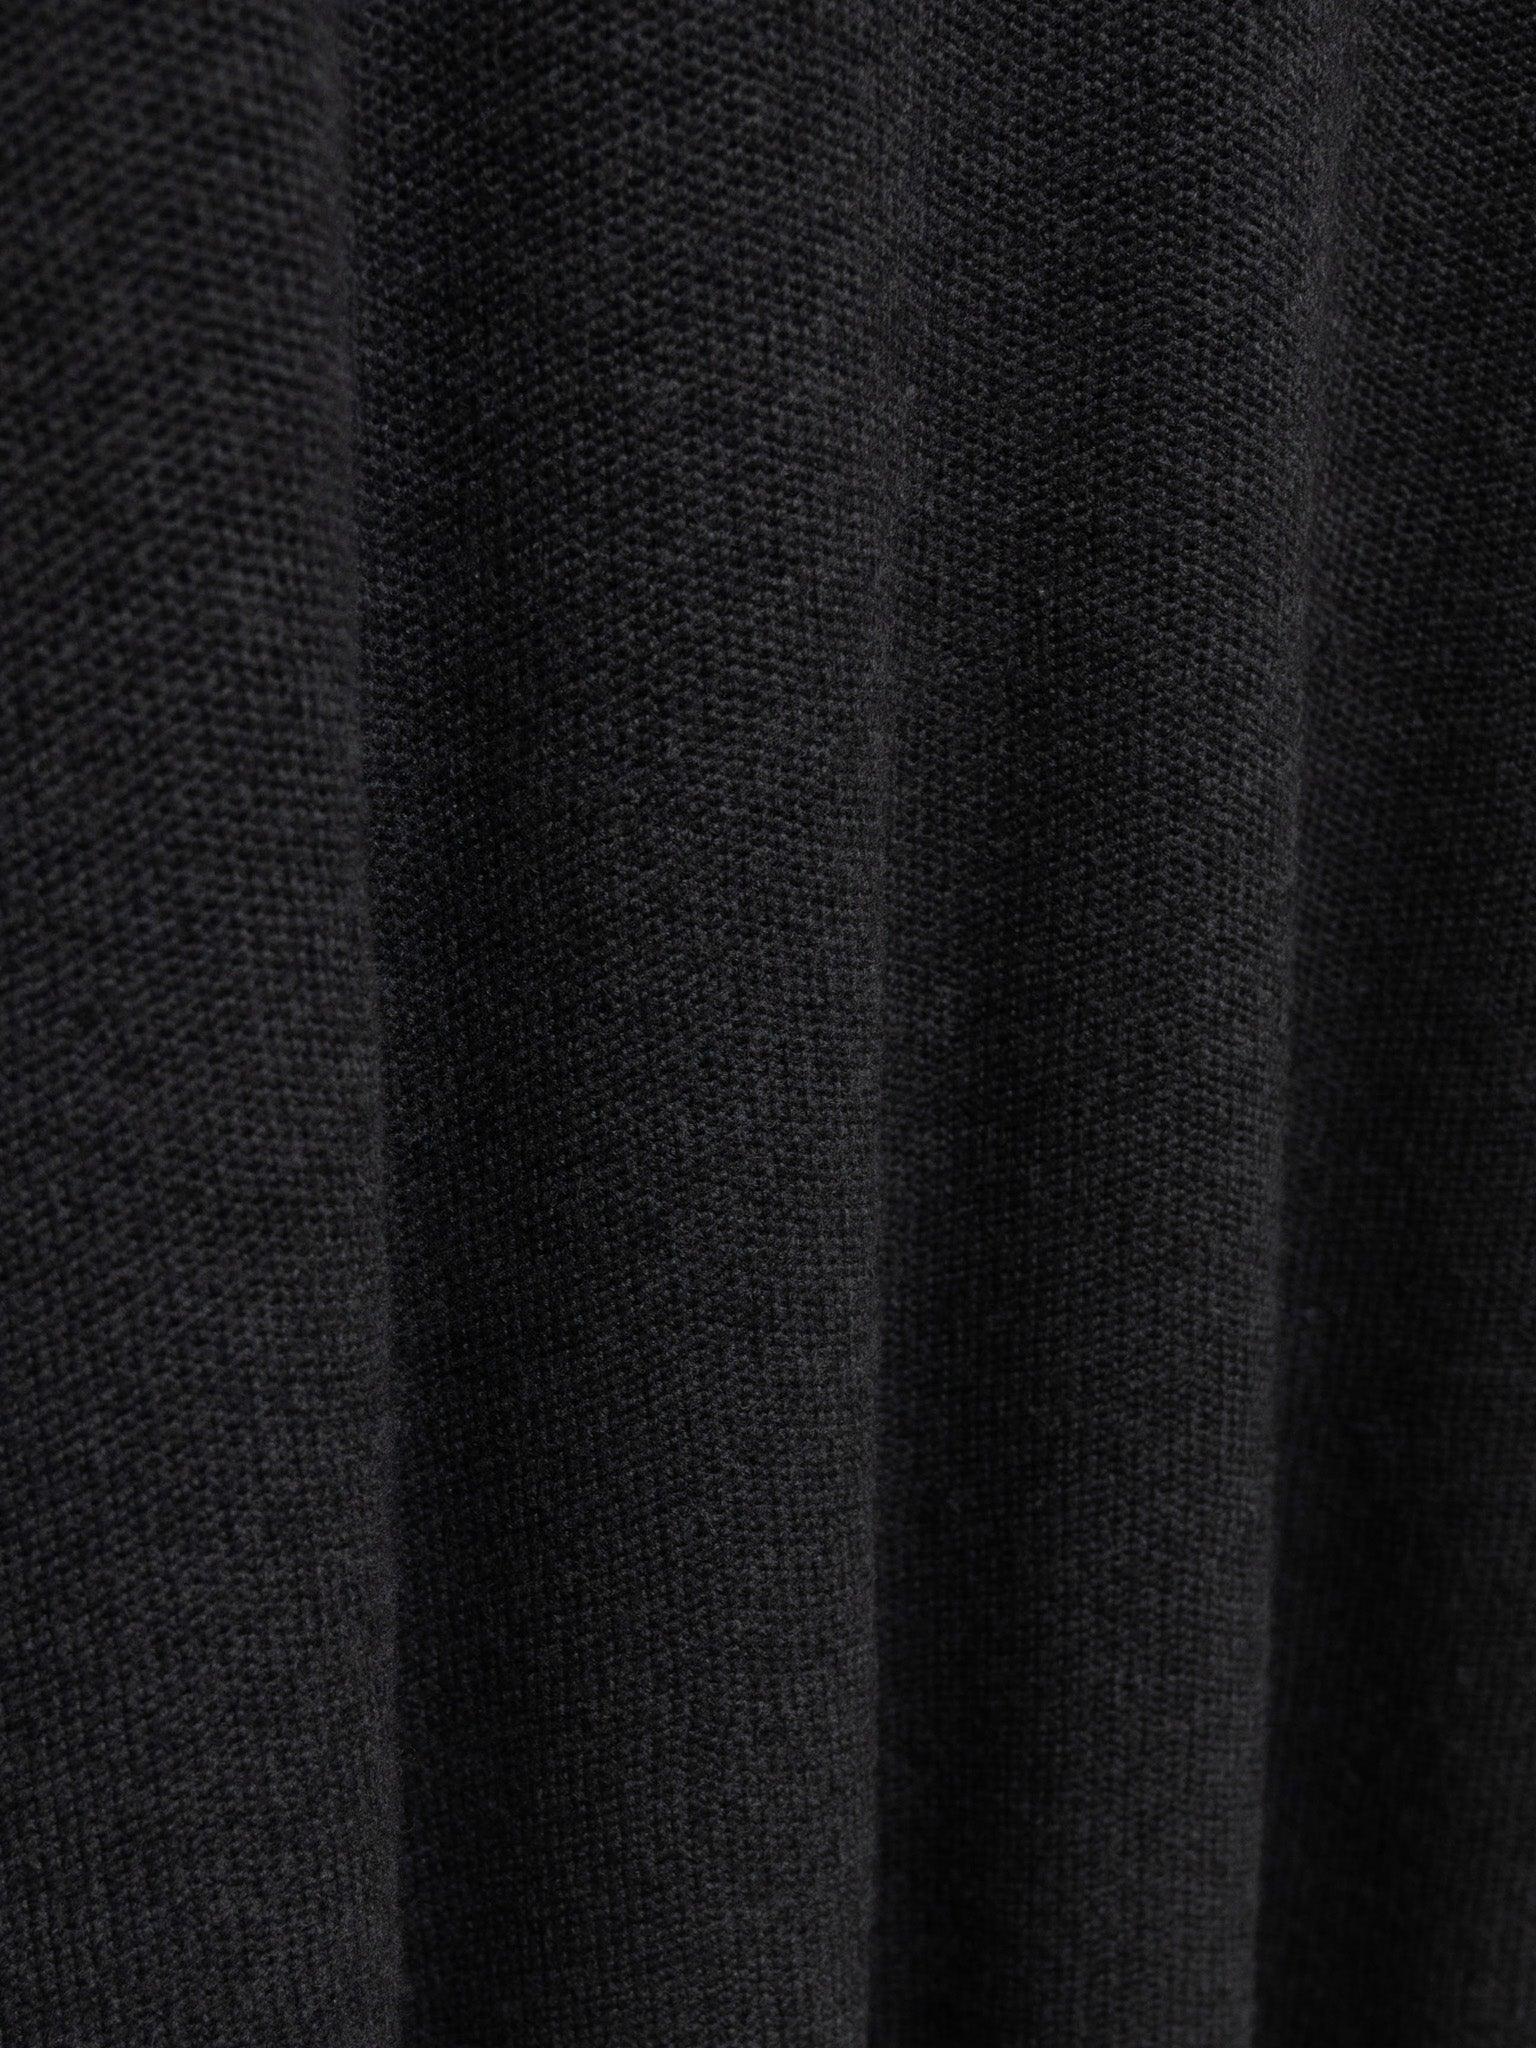 Namu Shop - Unfil Silk Wool Honeycomb Knit Dress - Charcoal